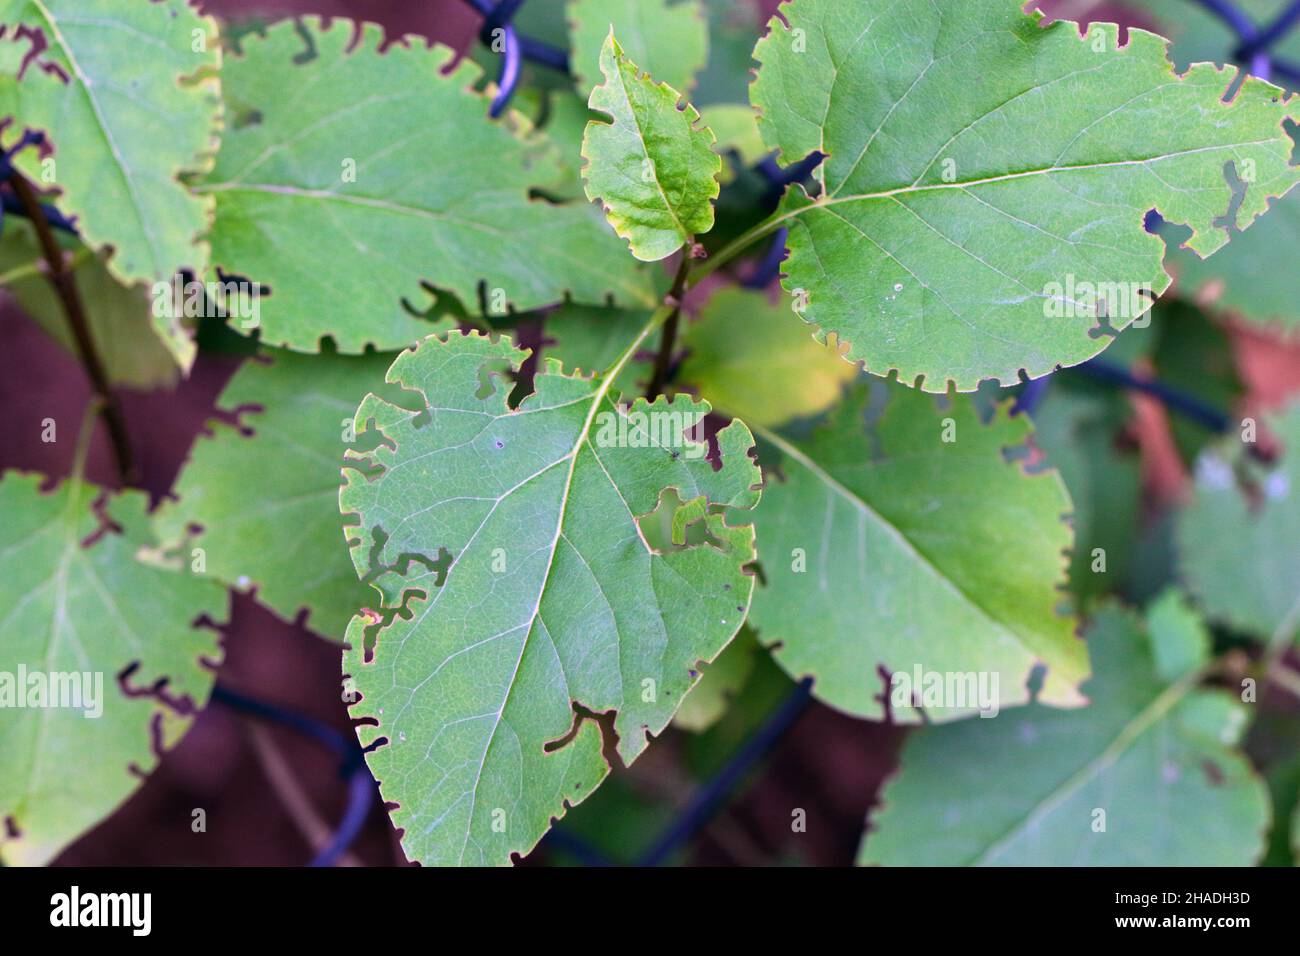 leaves of ornamental shrub - lilac damaged by pests - beetles of Otiorhynchus (sometimes called Otiorrhynchus) weevil. Stock Photo